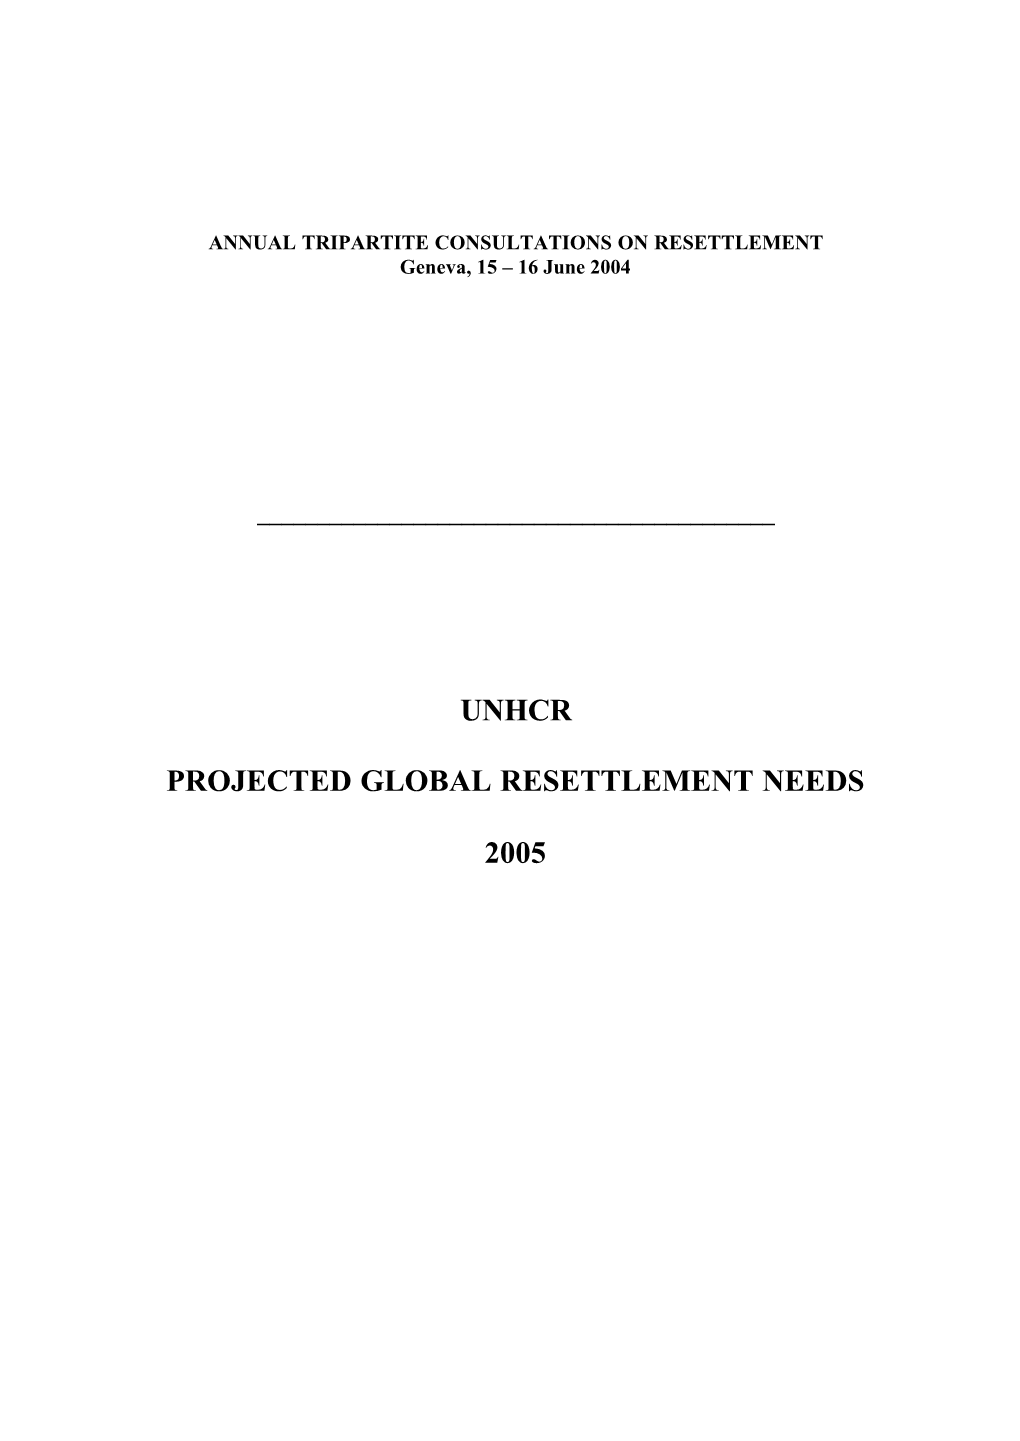 UNHCR Projected Global Resettlement Needs 2005